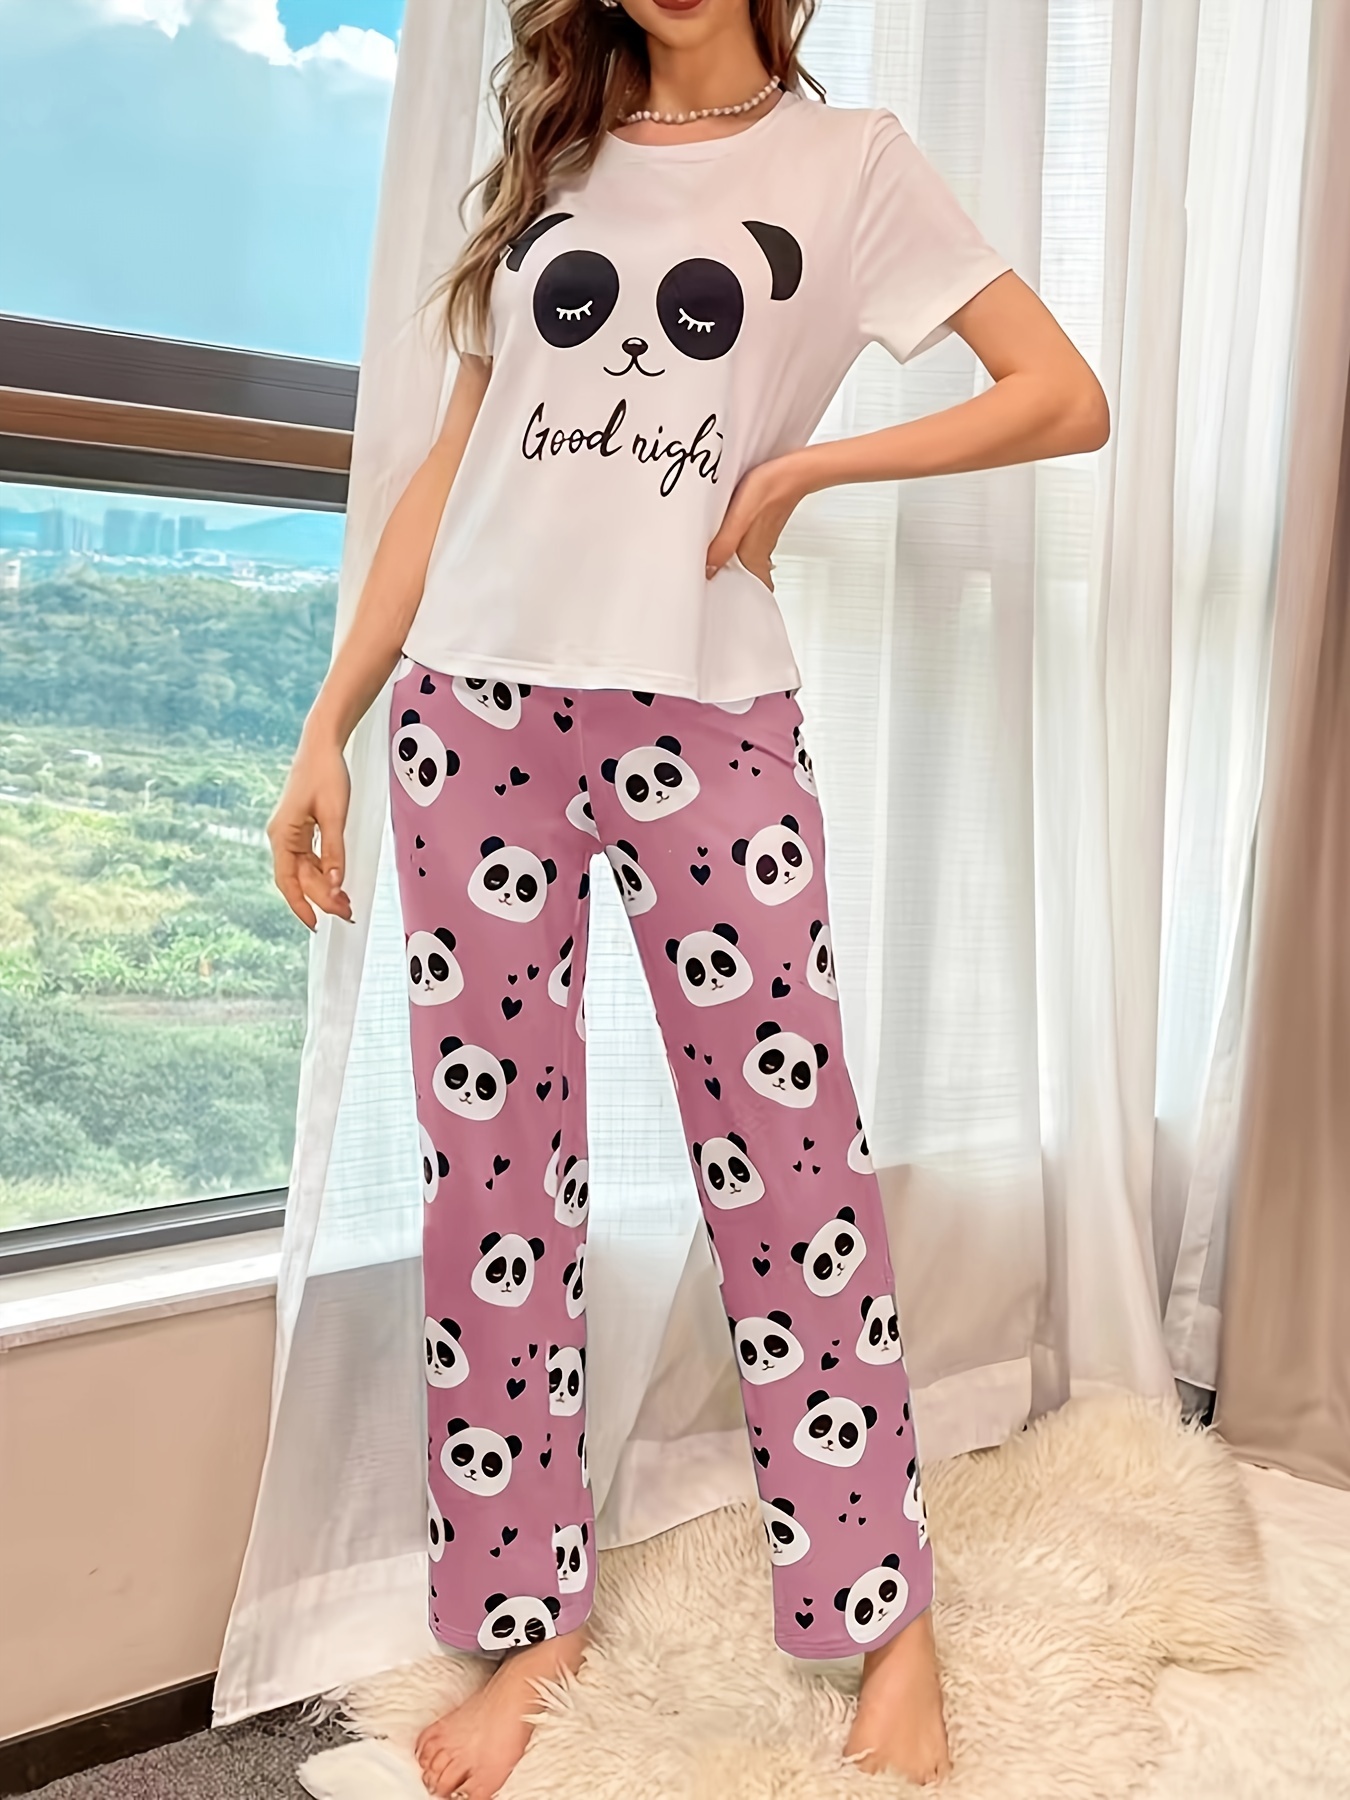 Cartoon Cotton Pajama Set For Women Short Sleeve, Long Pants, Plus Size  XXXL Loungewear Homeward Online Clothing Stores T200707 From Luo04, $24.93